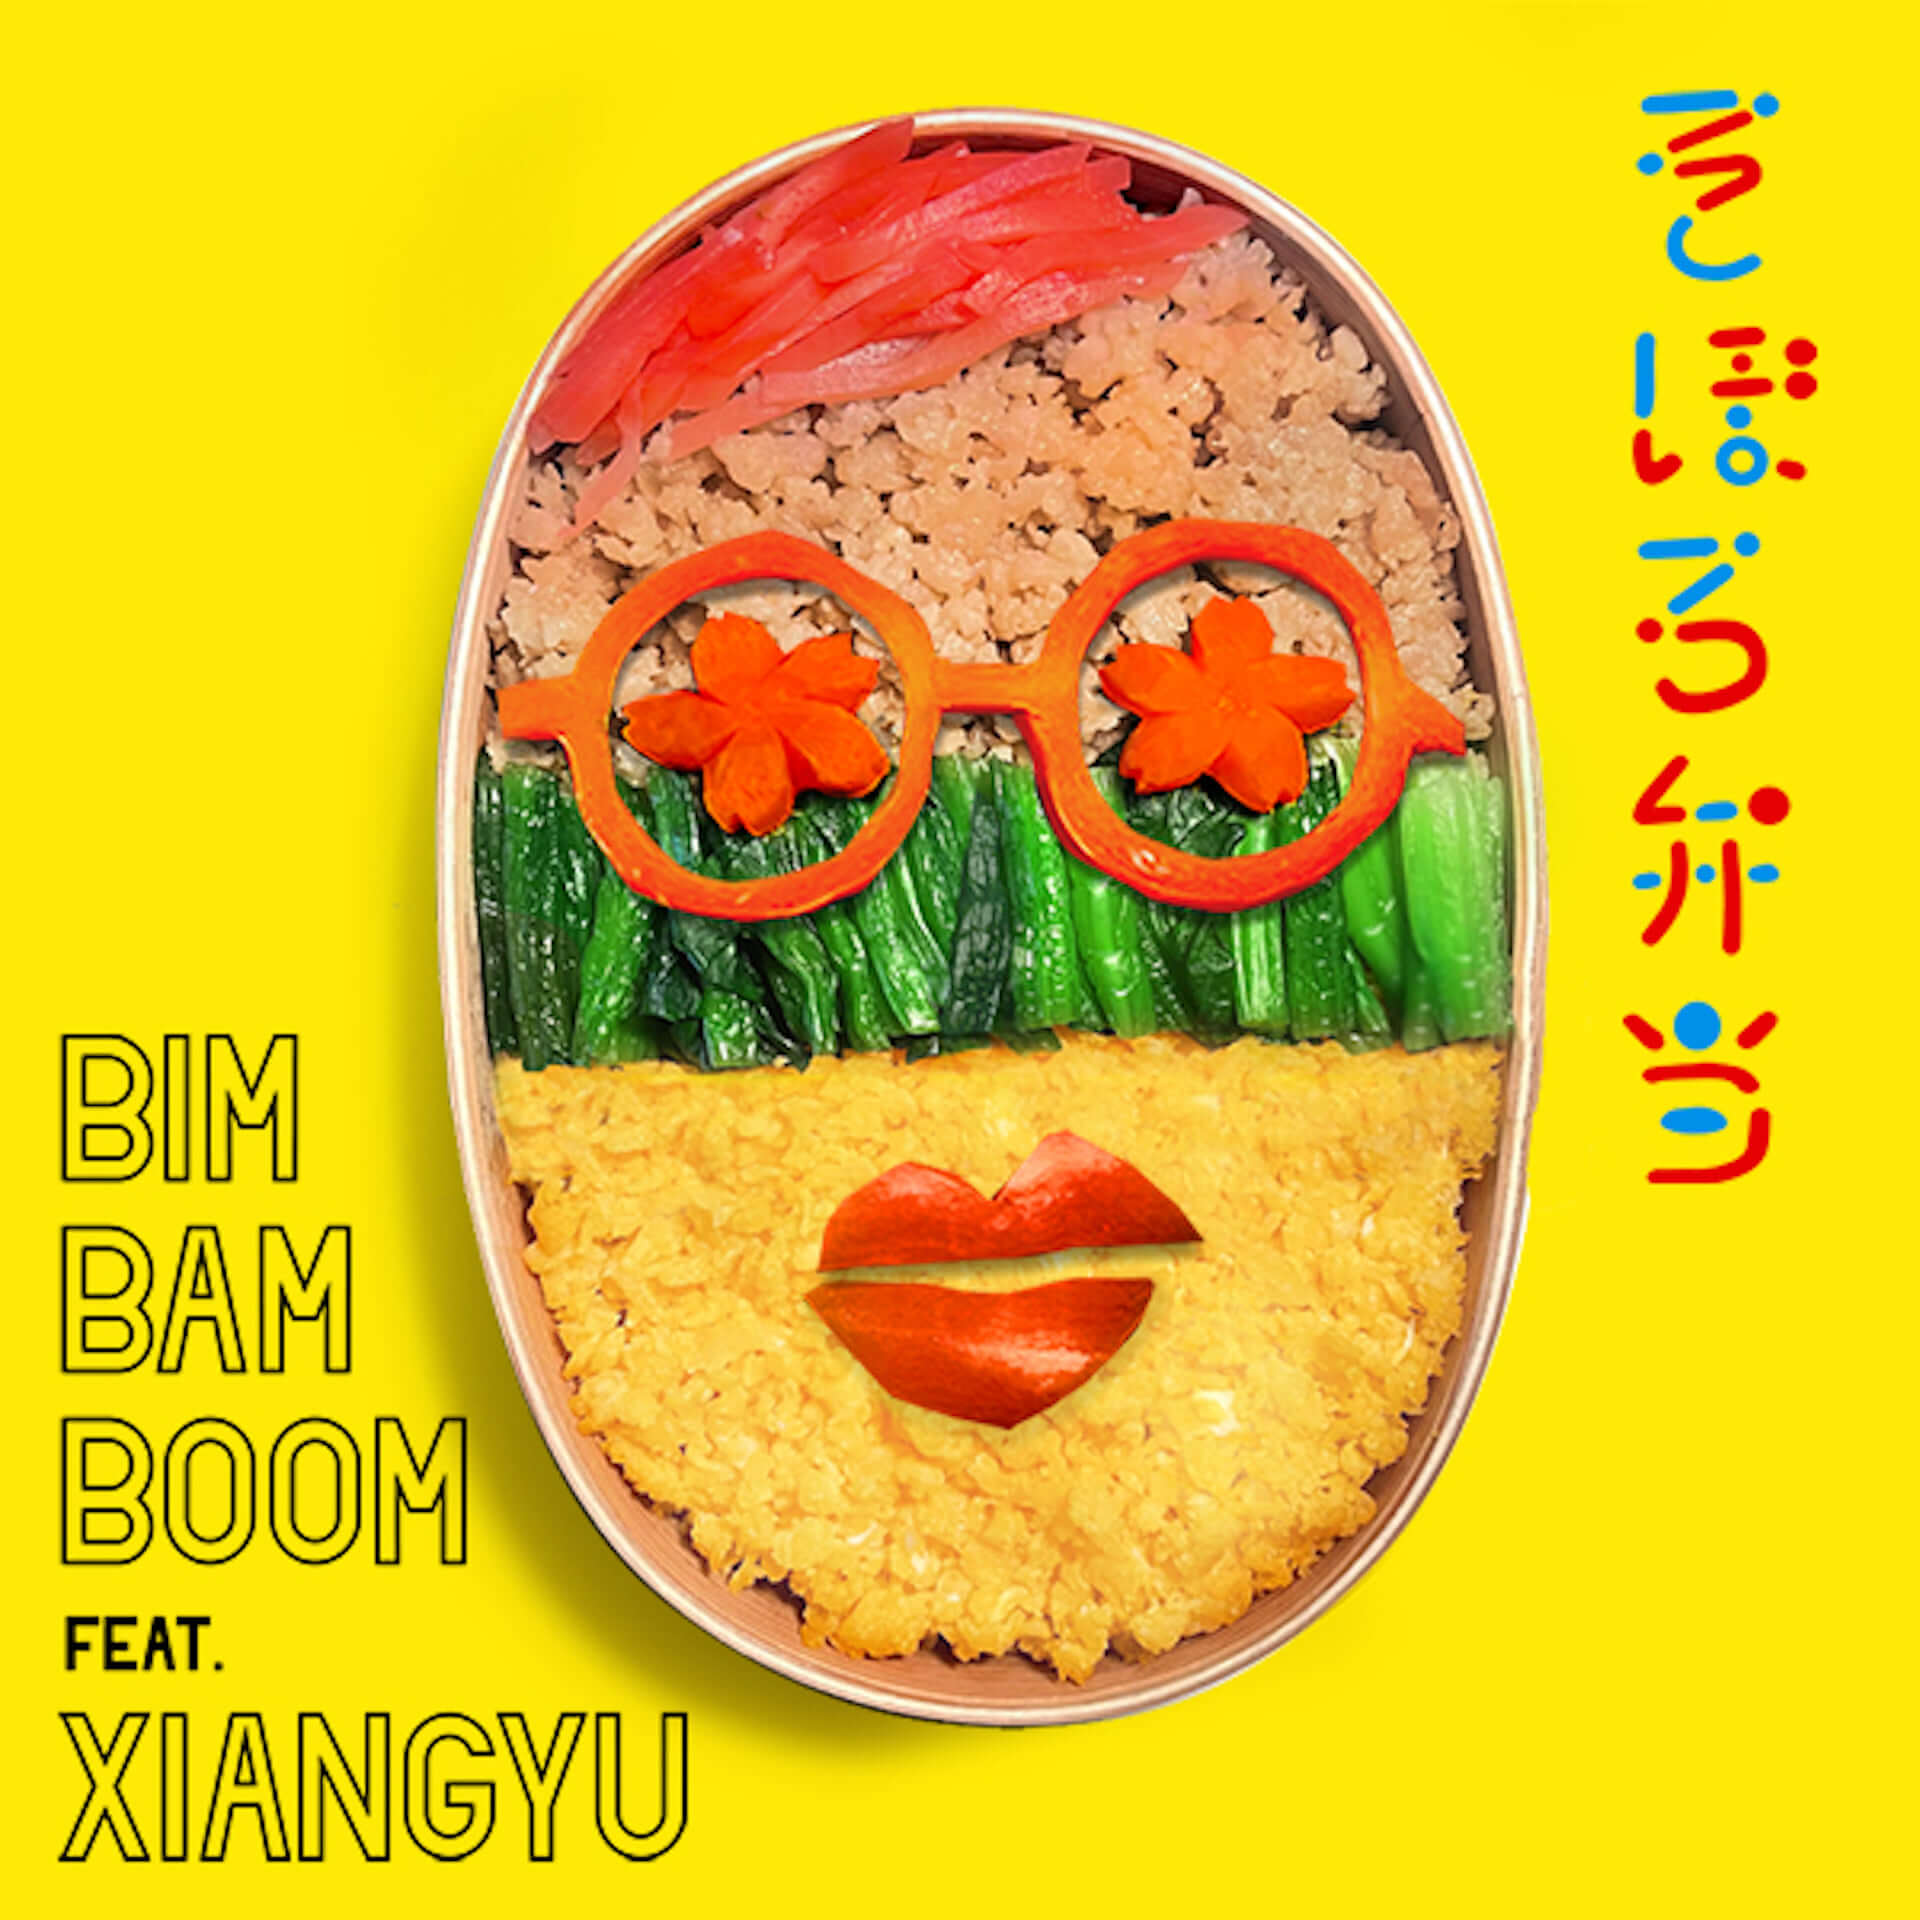 BimBamBoomがxiangyuを迎えたニューシングル“そぼろ弁当”をリリース！メンバーが監督・脚本・編集を手掛けたMVも公開 music210224_bimbamboom-xiangyu_2-1920x1920